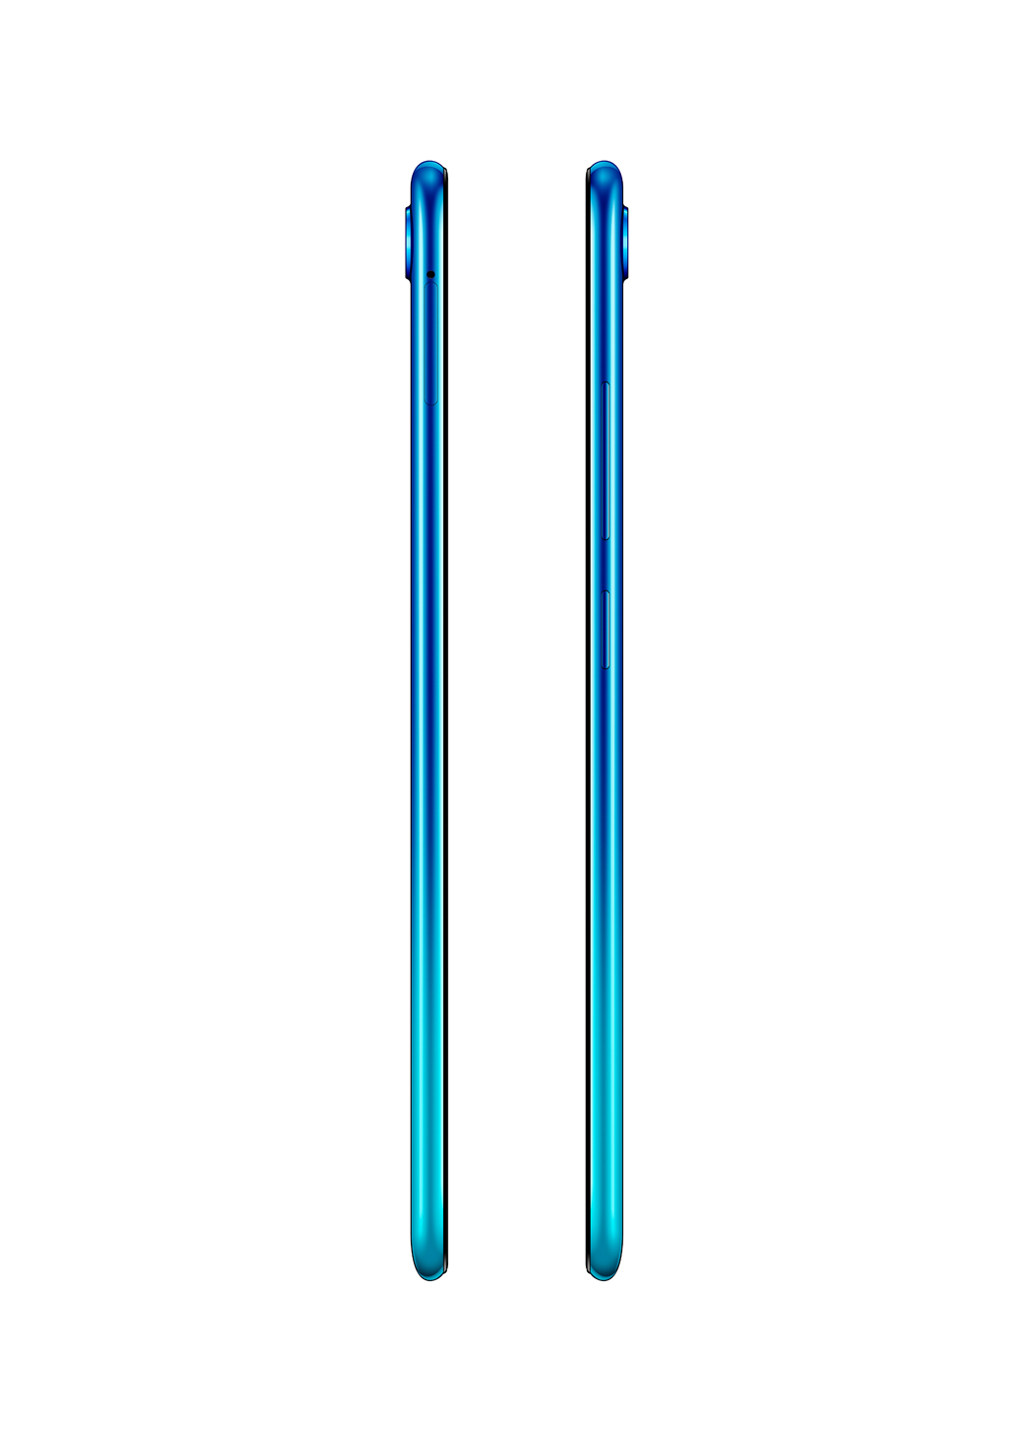 Смартфон Vivo y91c 2/32gb ocean blue (137494214)